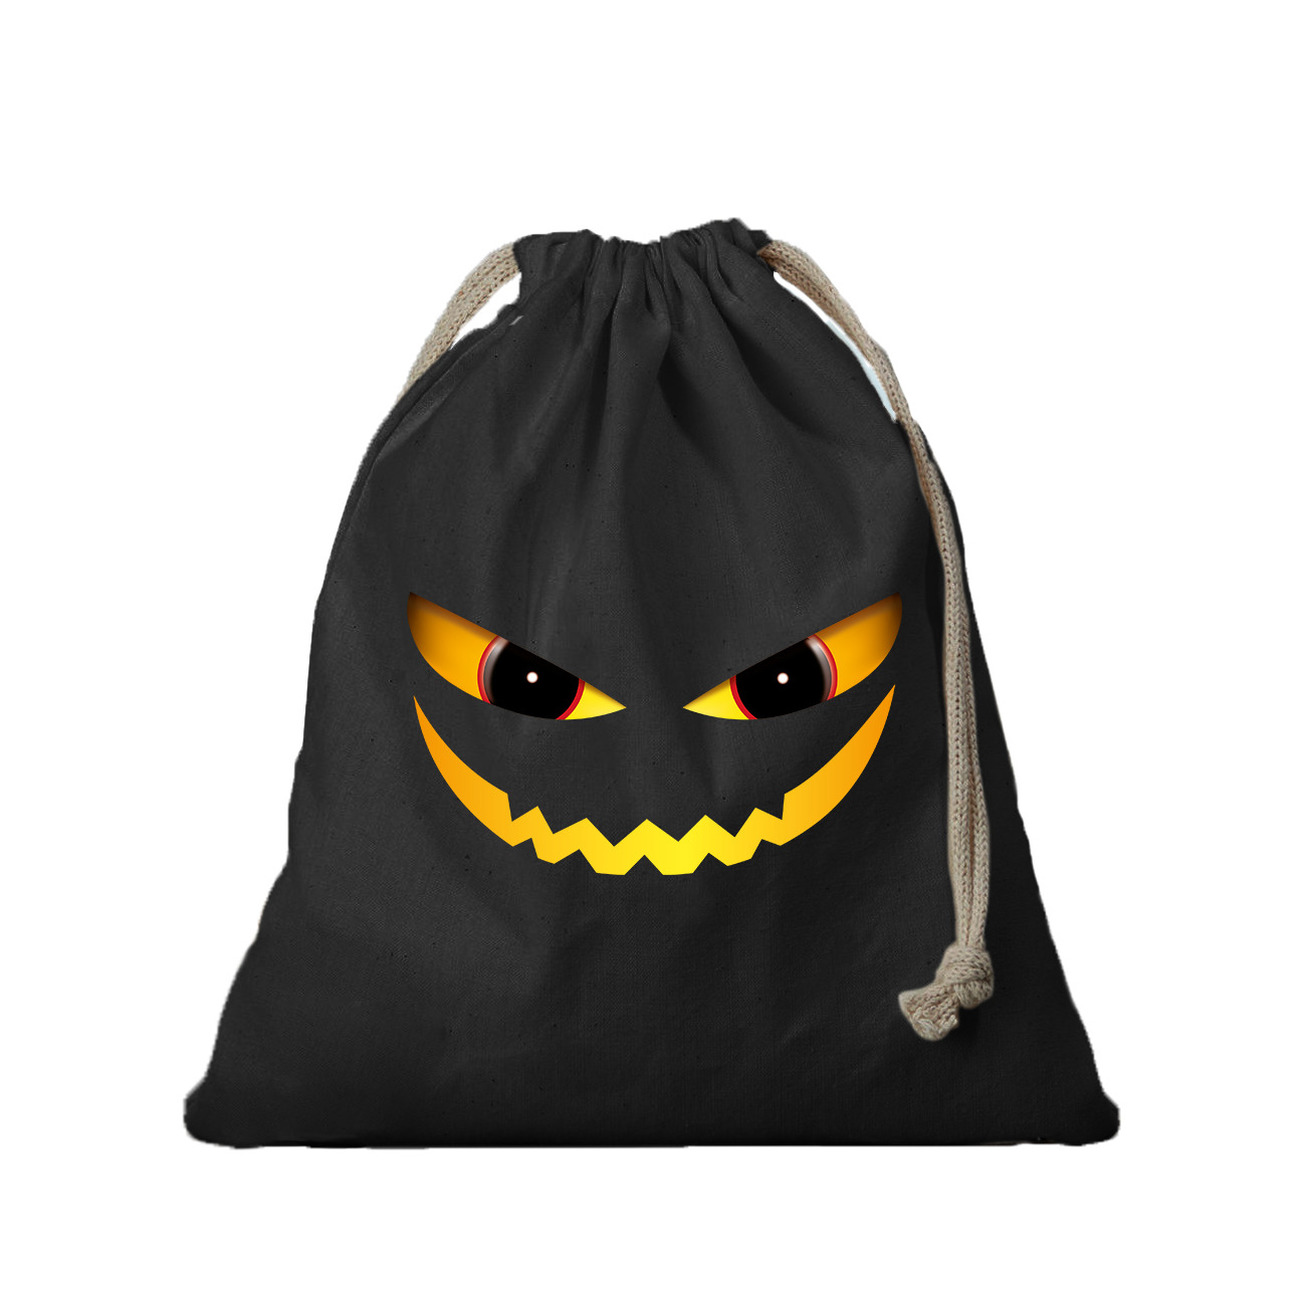 Halloween - 3x Duivel gezicht halloween canvas snoep tasje/ snoepzakje zwart met koord 25 x 30 cm